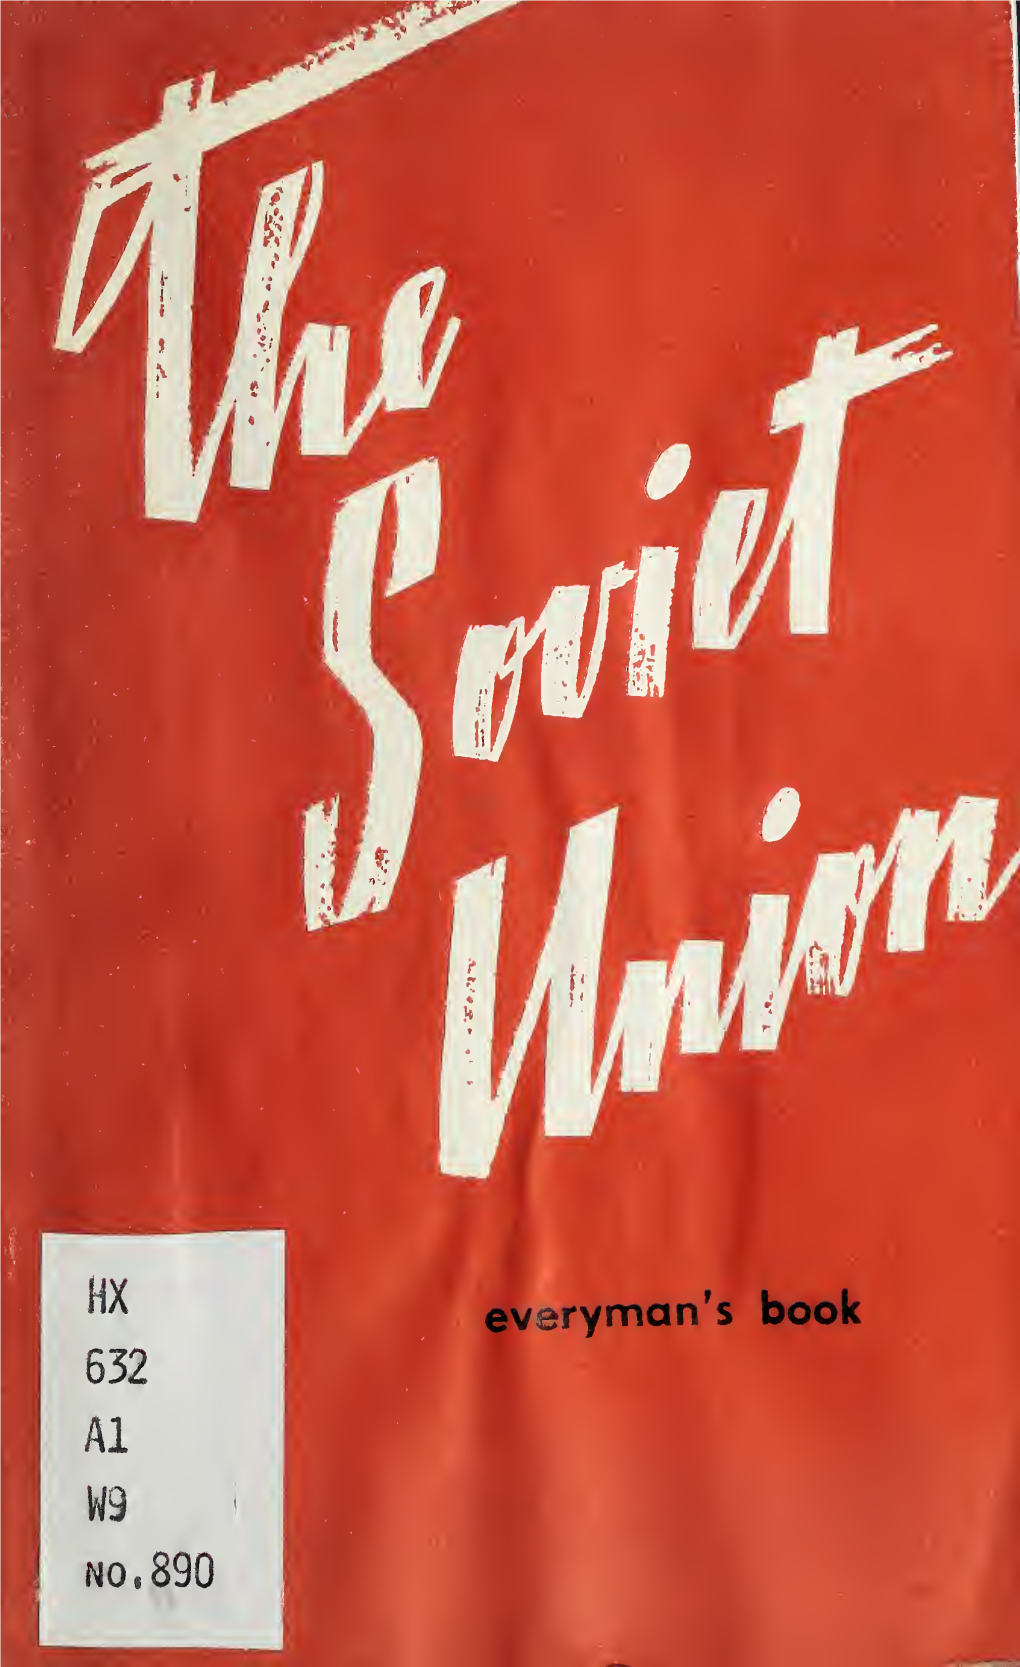 The Soviet Union: Everyman's Book